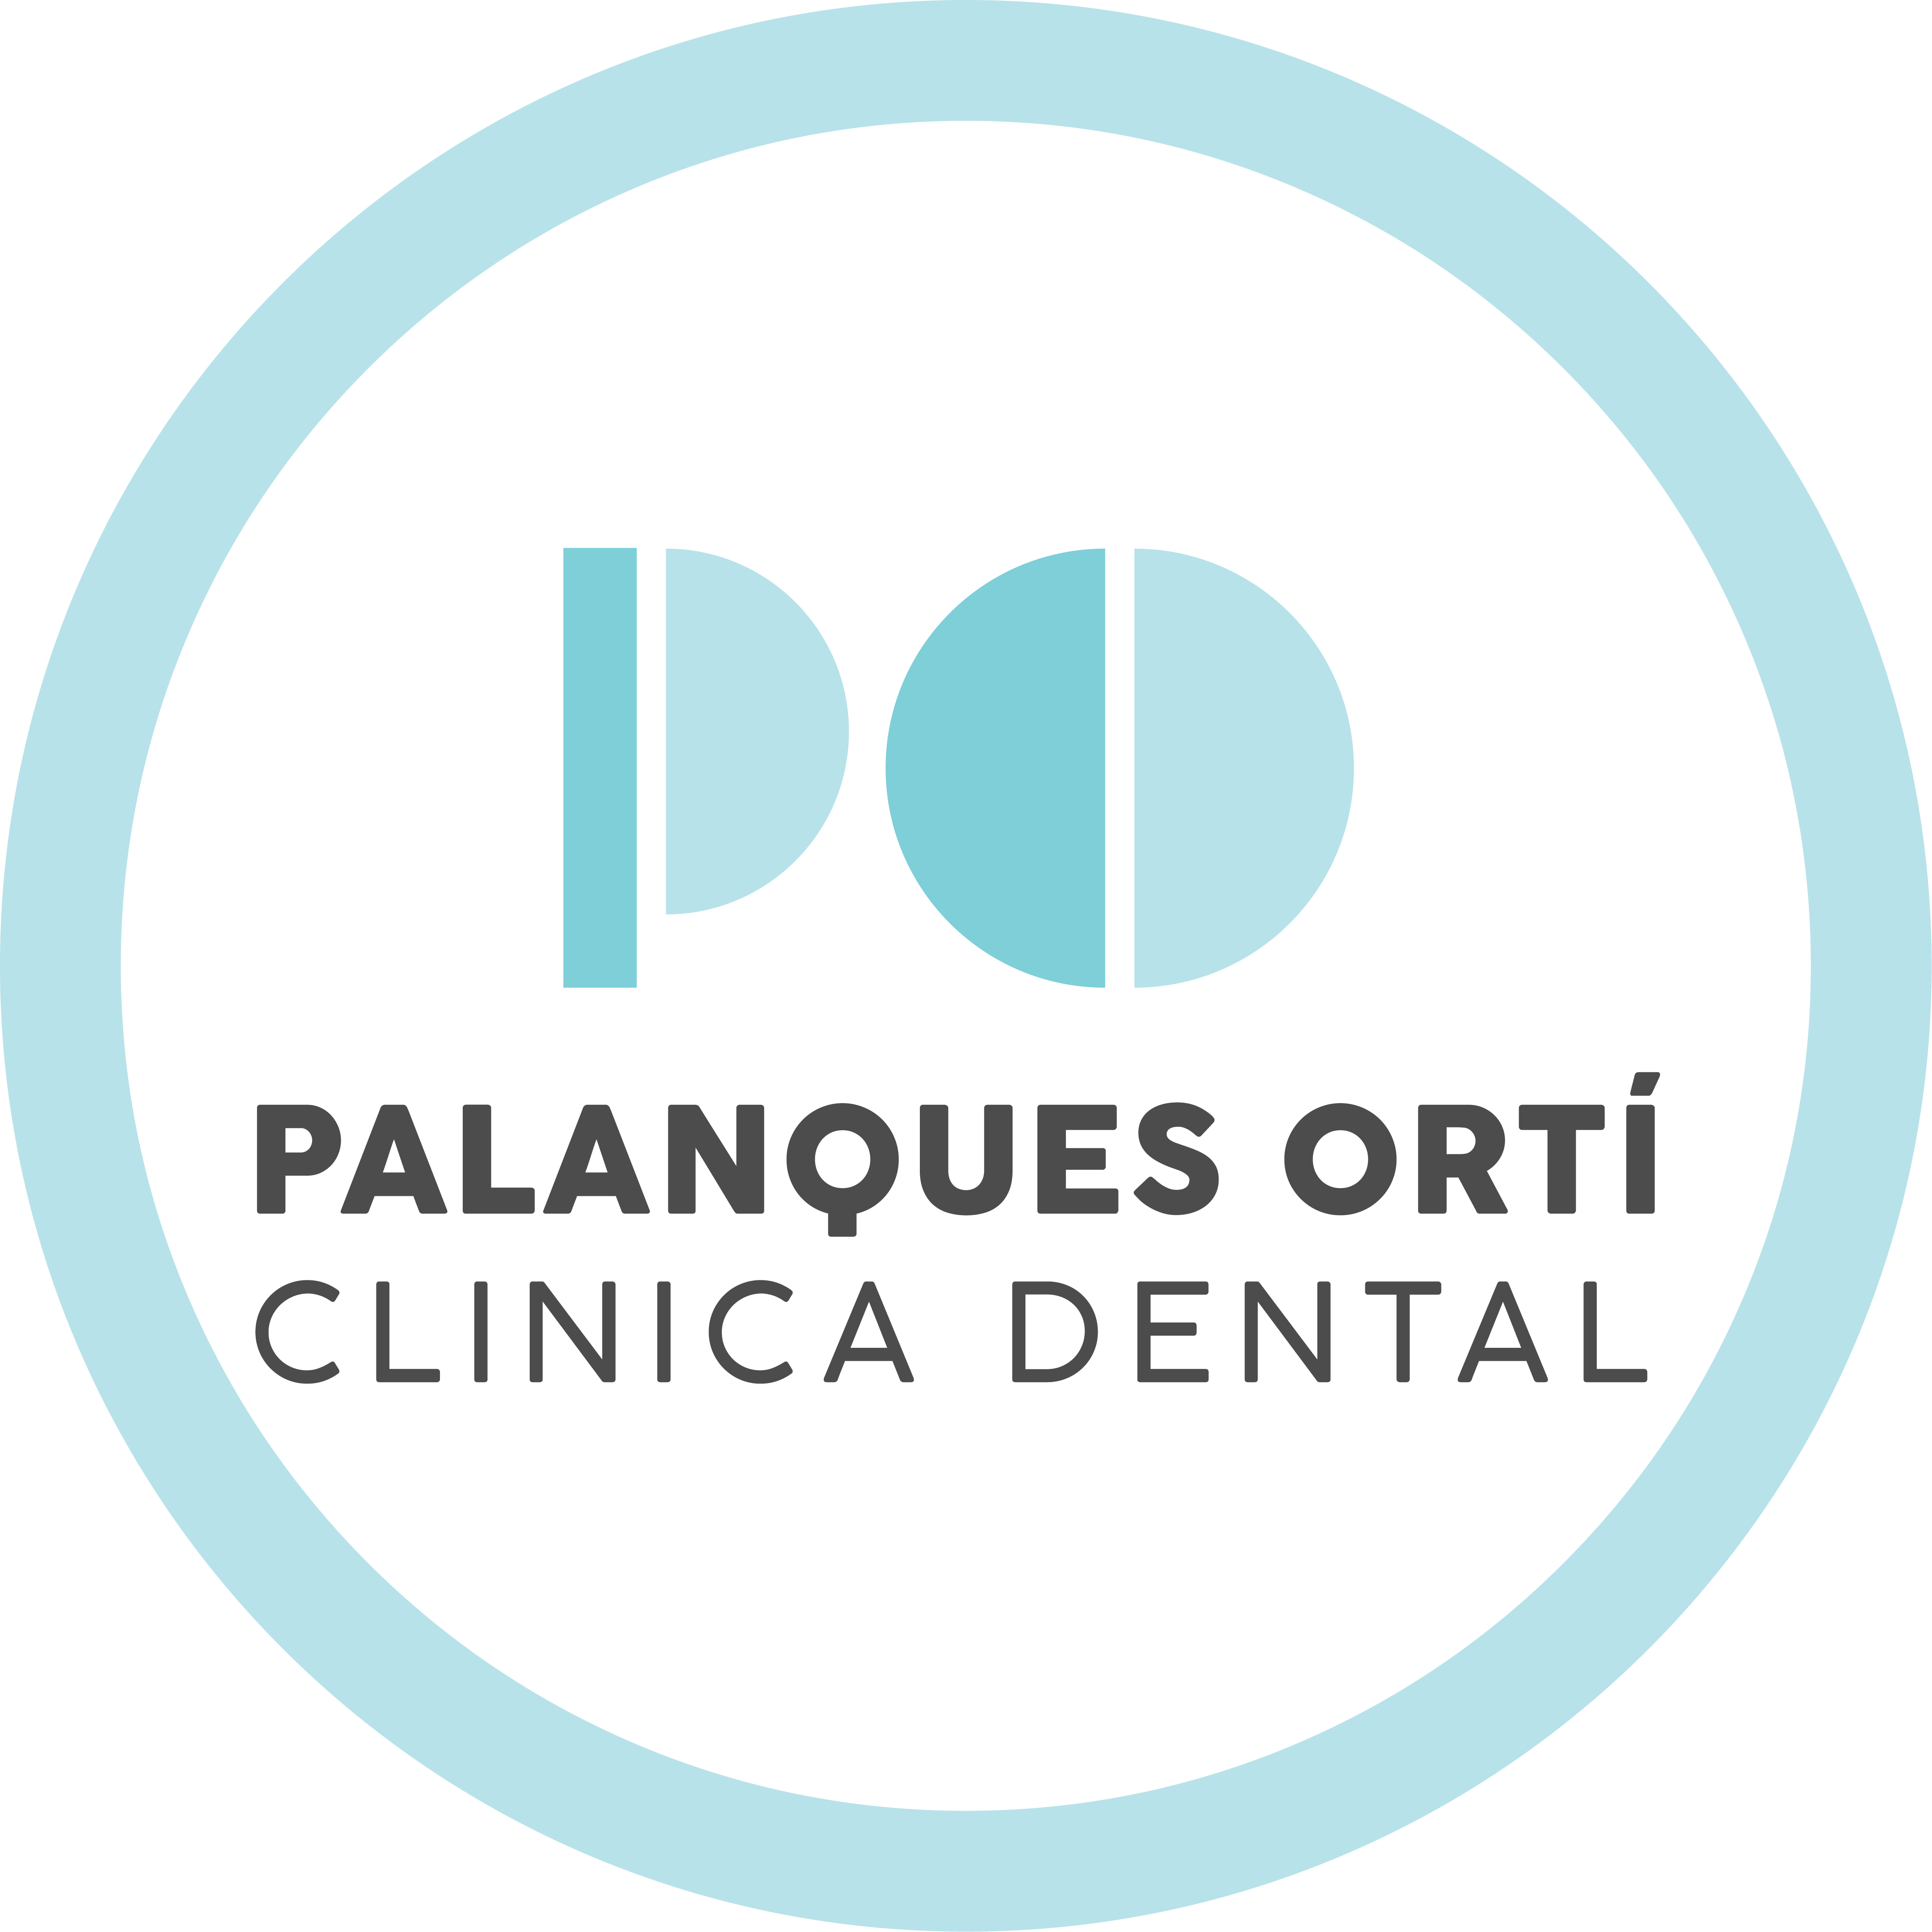 Clínica Dental Palanques Ortí Logo